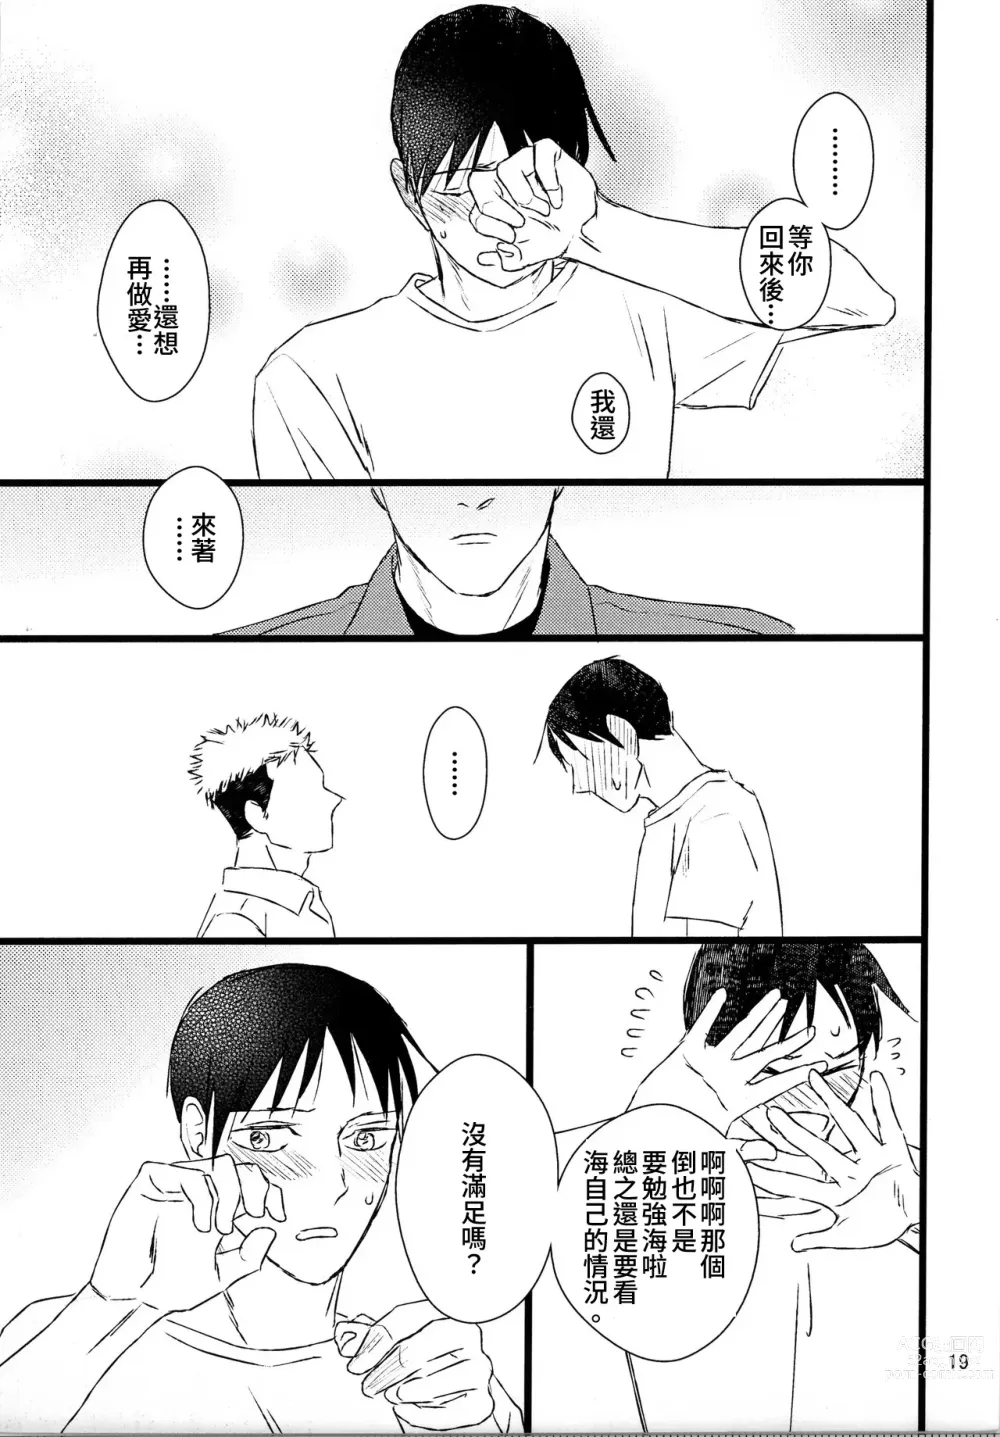 Page 17 of doujinshi Ajin 亜人